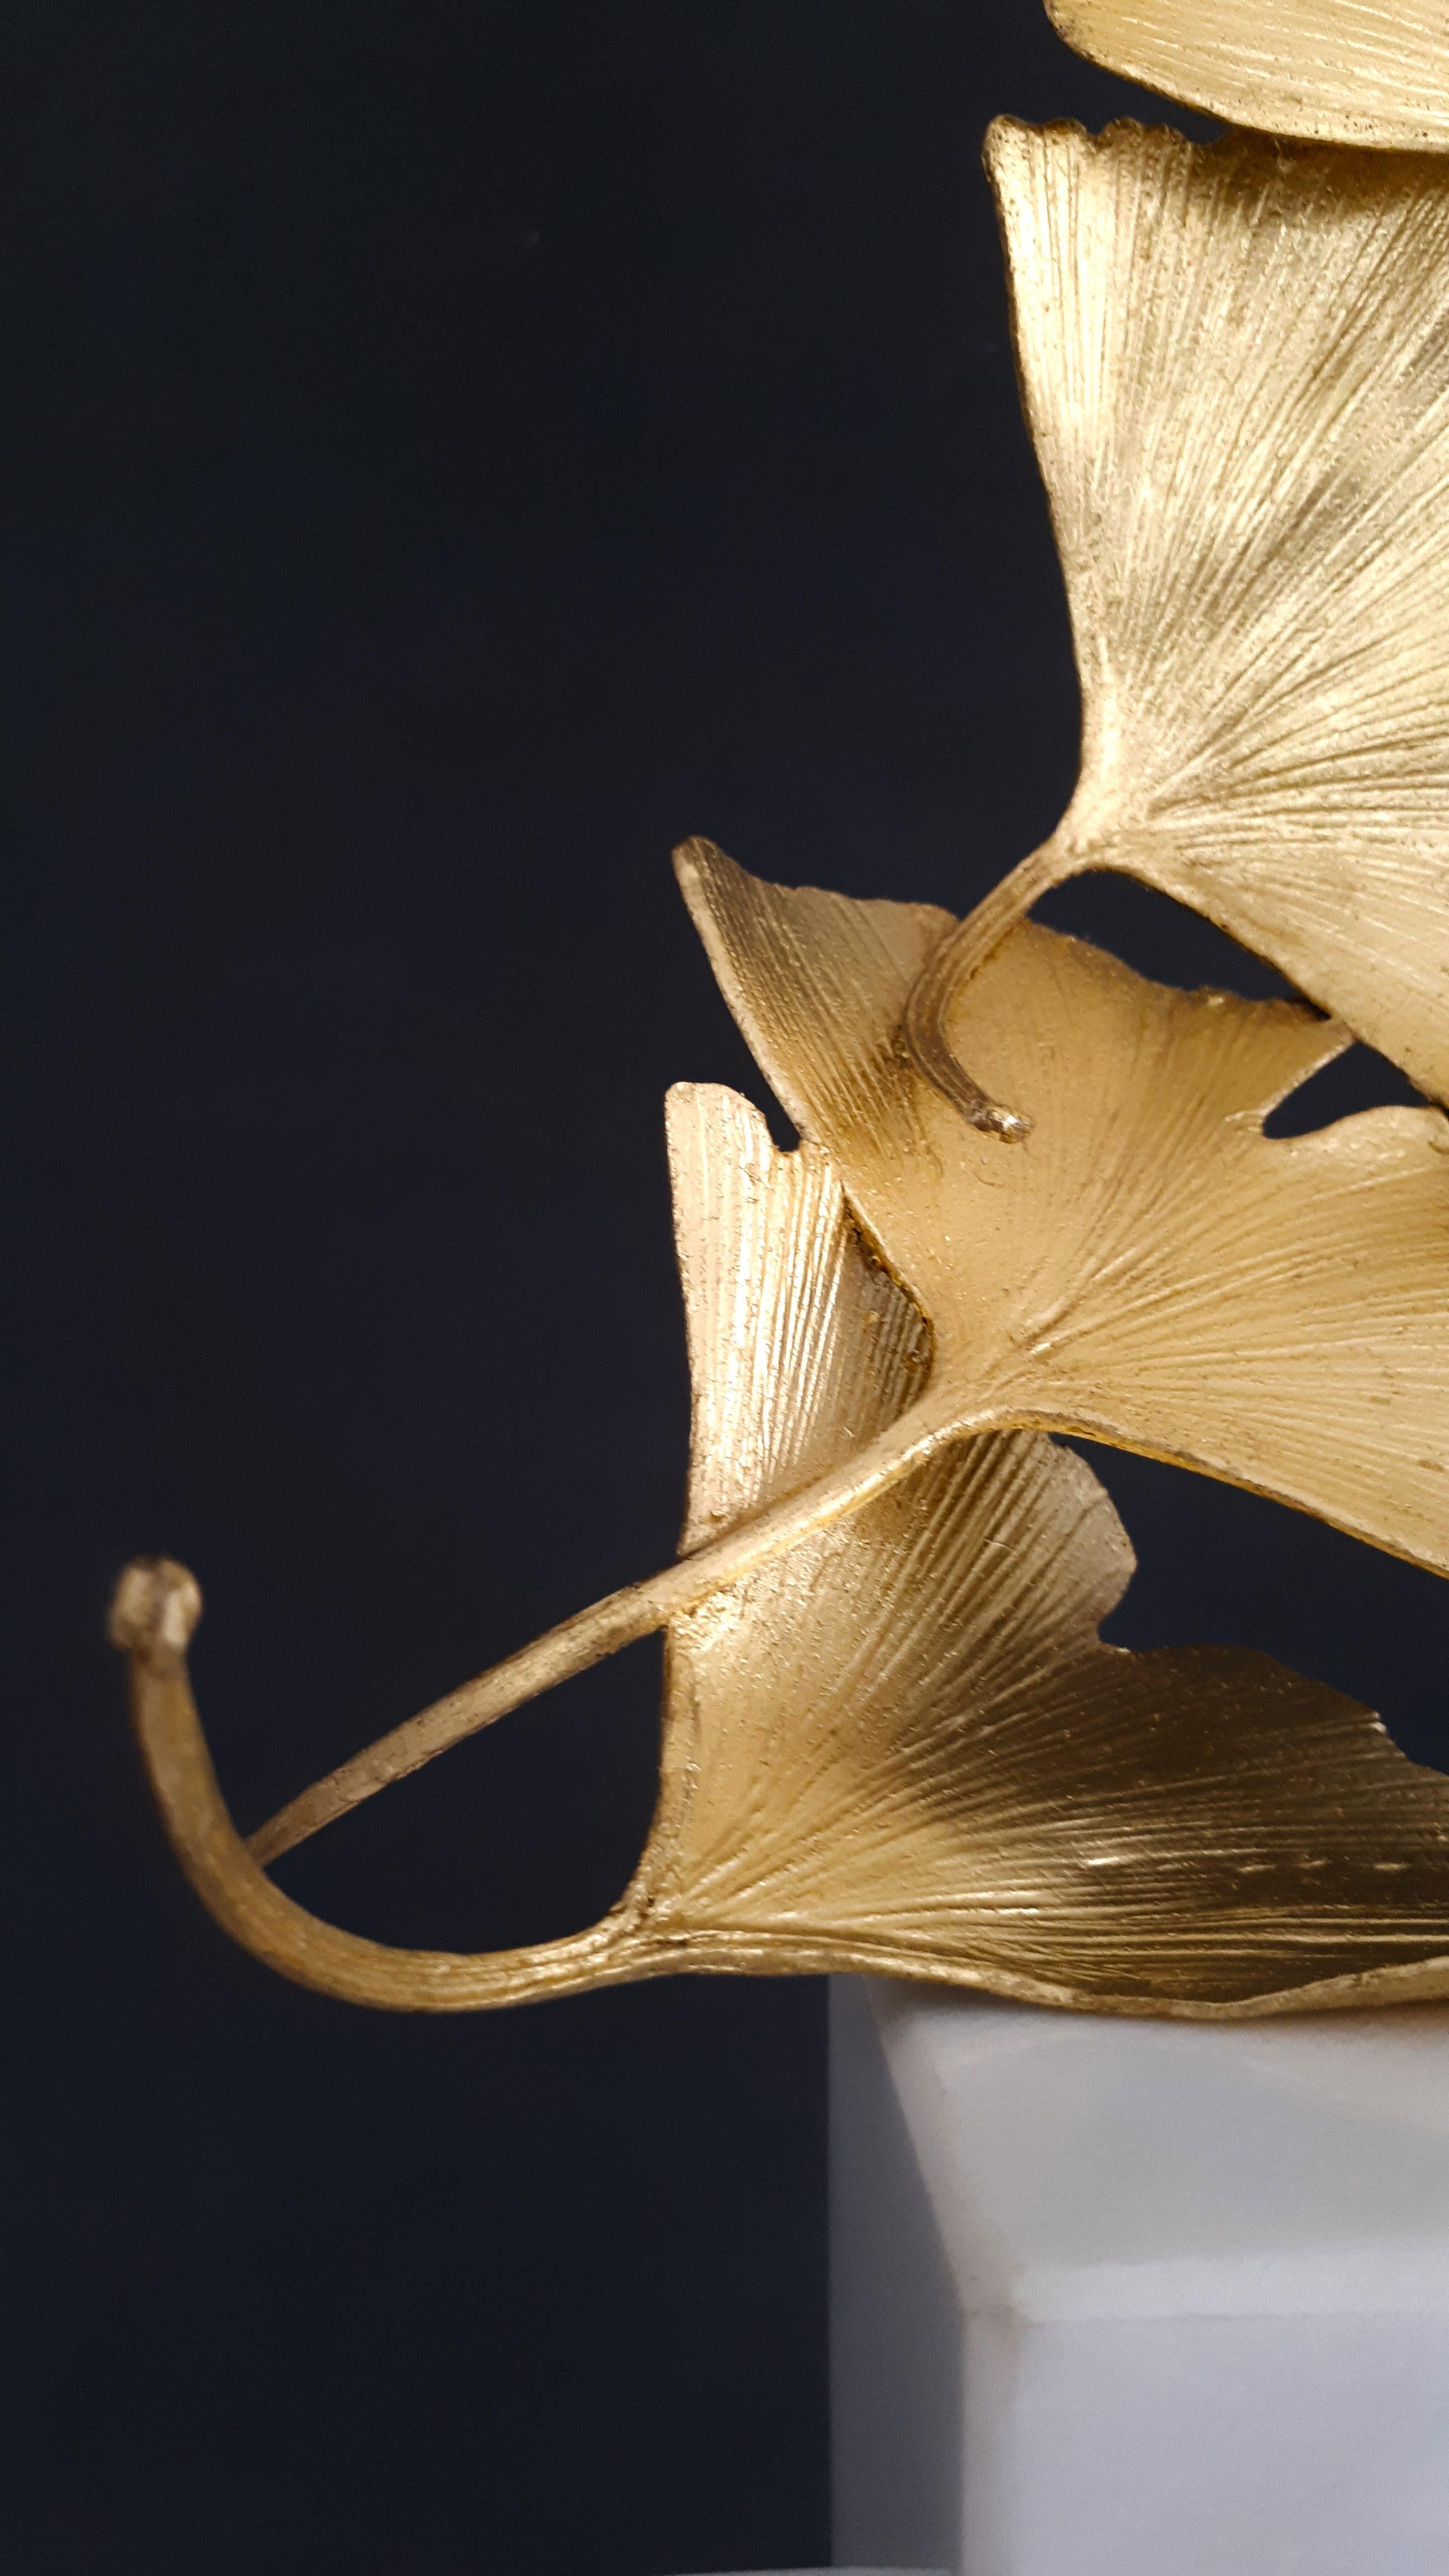 Artist: Kuno Vollet

Title: Golden Gingko with 6 leaves art sculpture

Materials: Cast brass, gold leaf, white marble base

Size: 56 x 9 x 9 cm

_______________________________________________________________________

This elegant original bronze